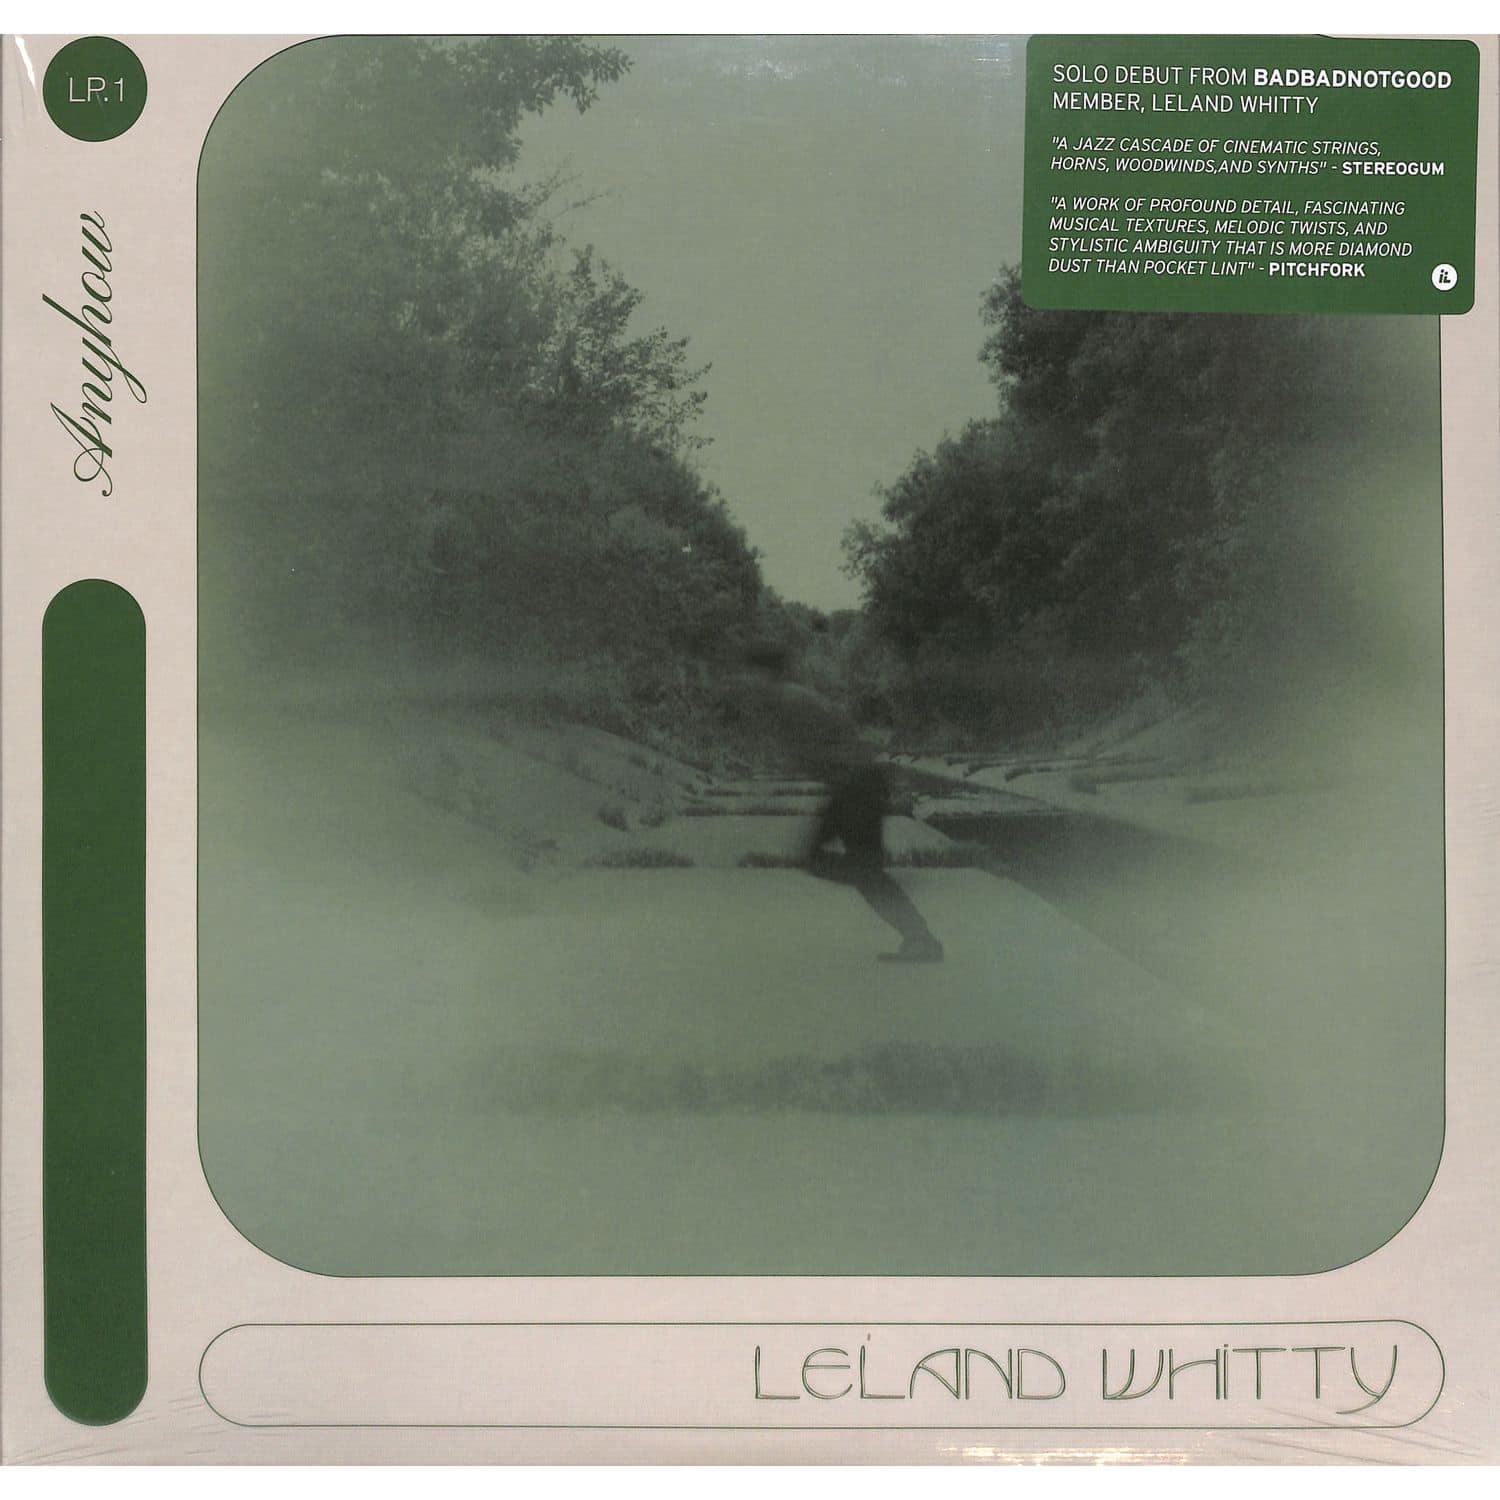 Leland Whitty - ANYHOW 